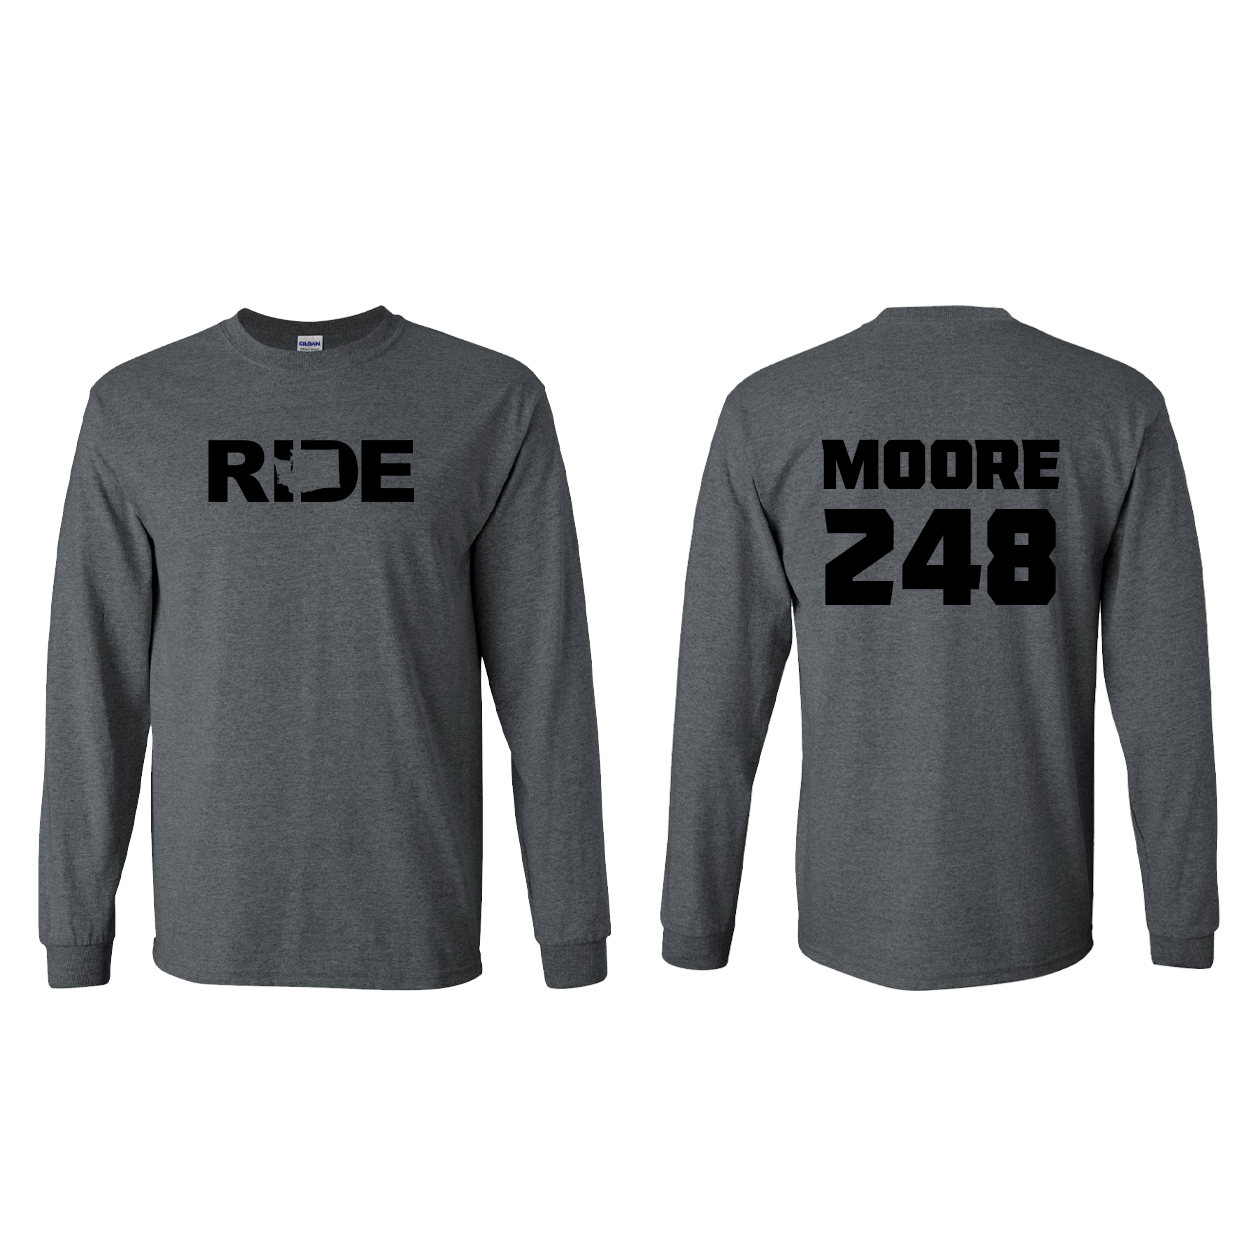 FXR BMX Race Team Classic Athlete Support Long Sleeve Shirt MOORE #248 Dark Heather (Black Logo)